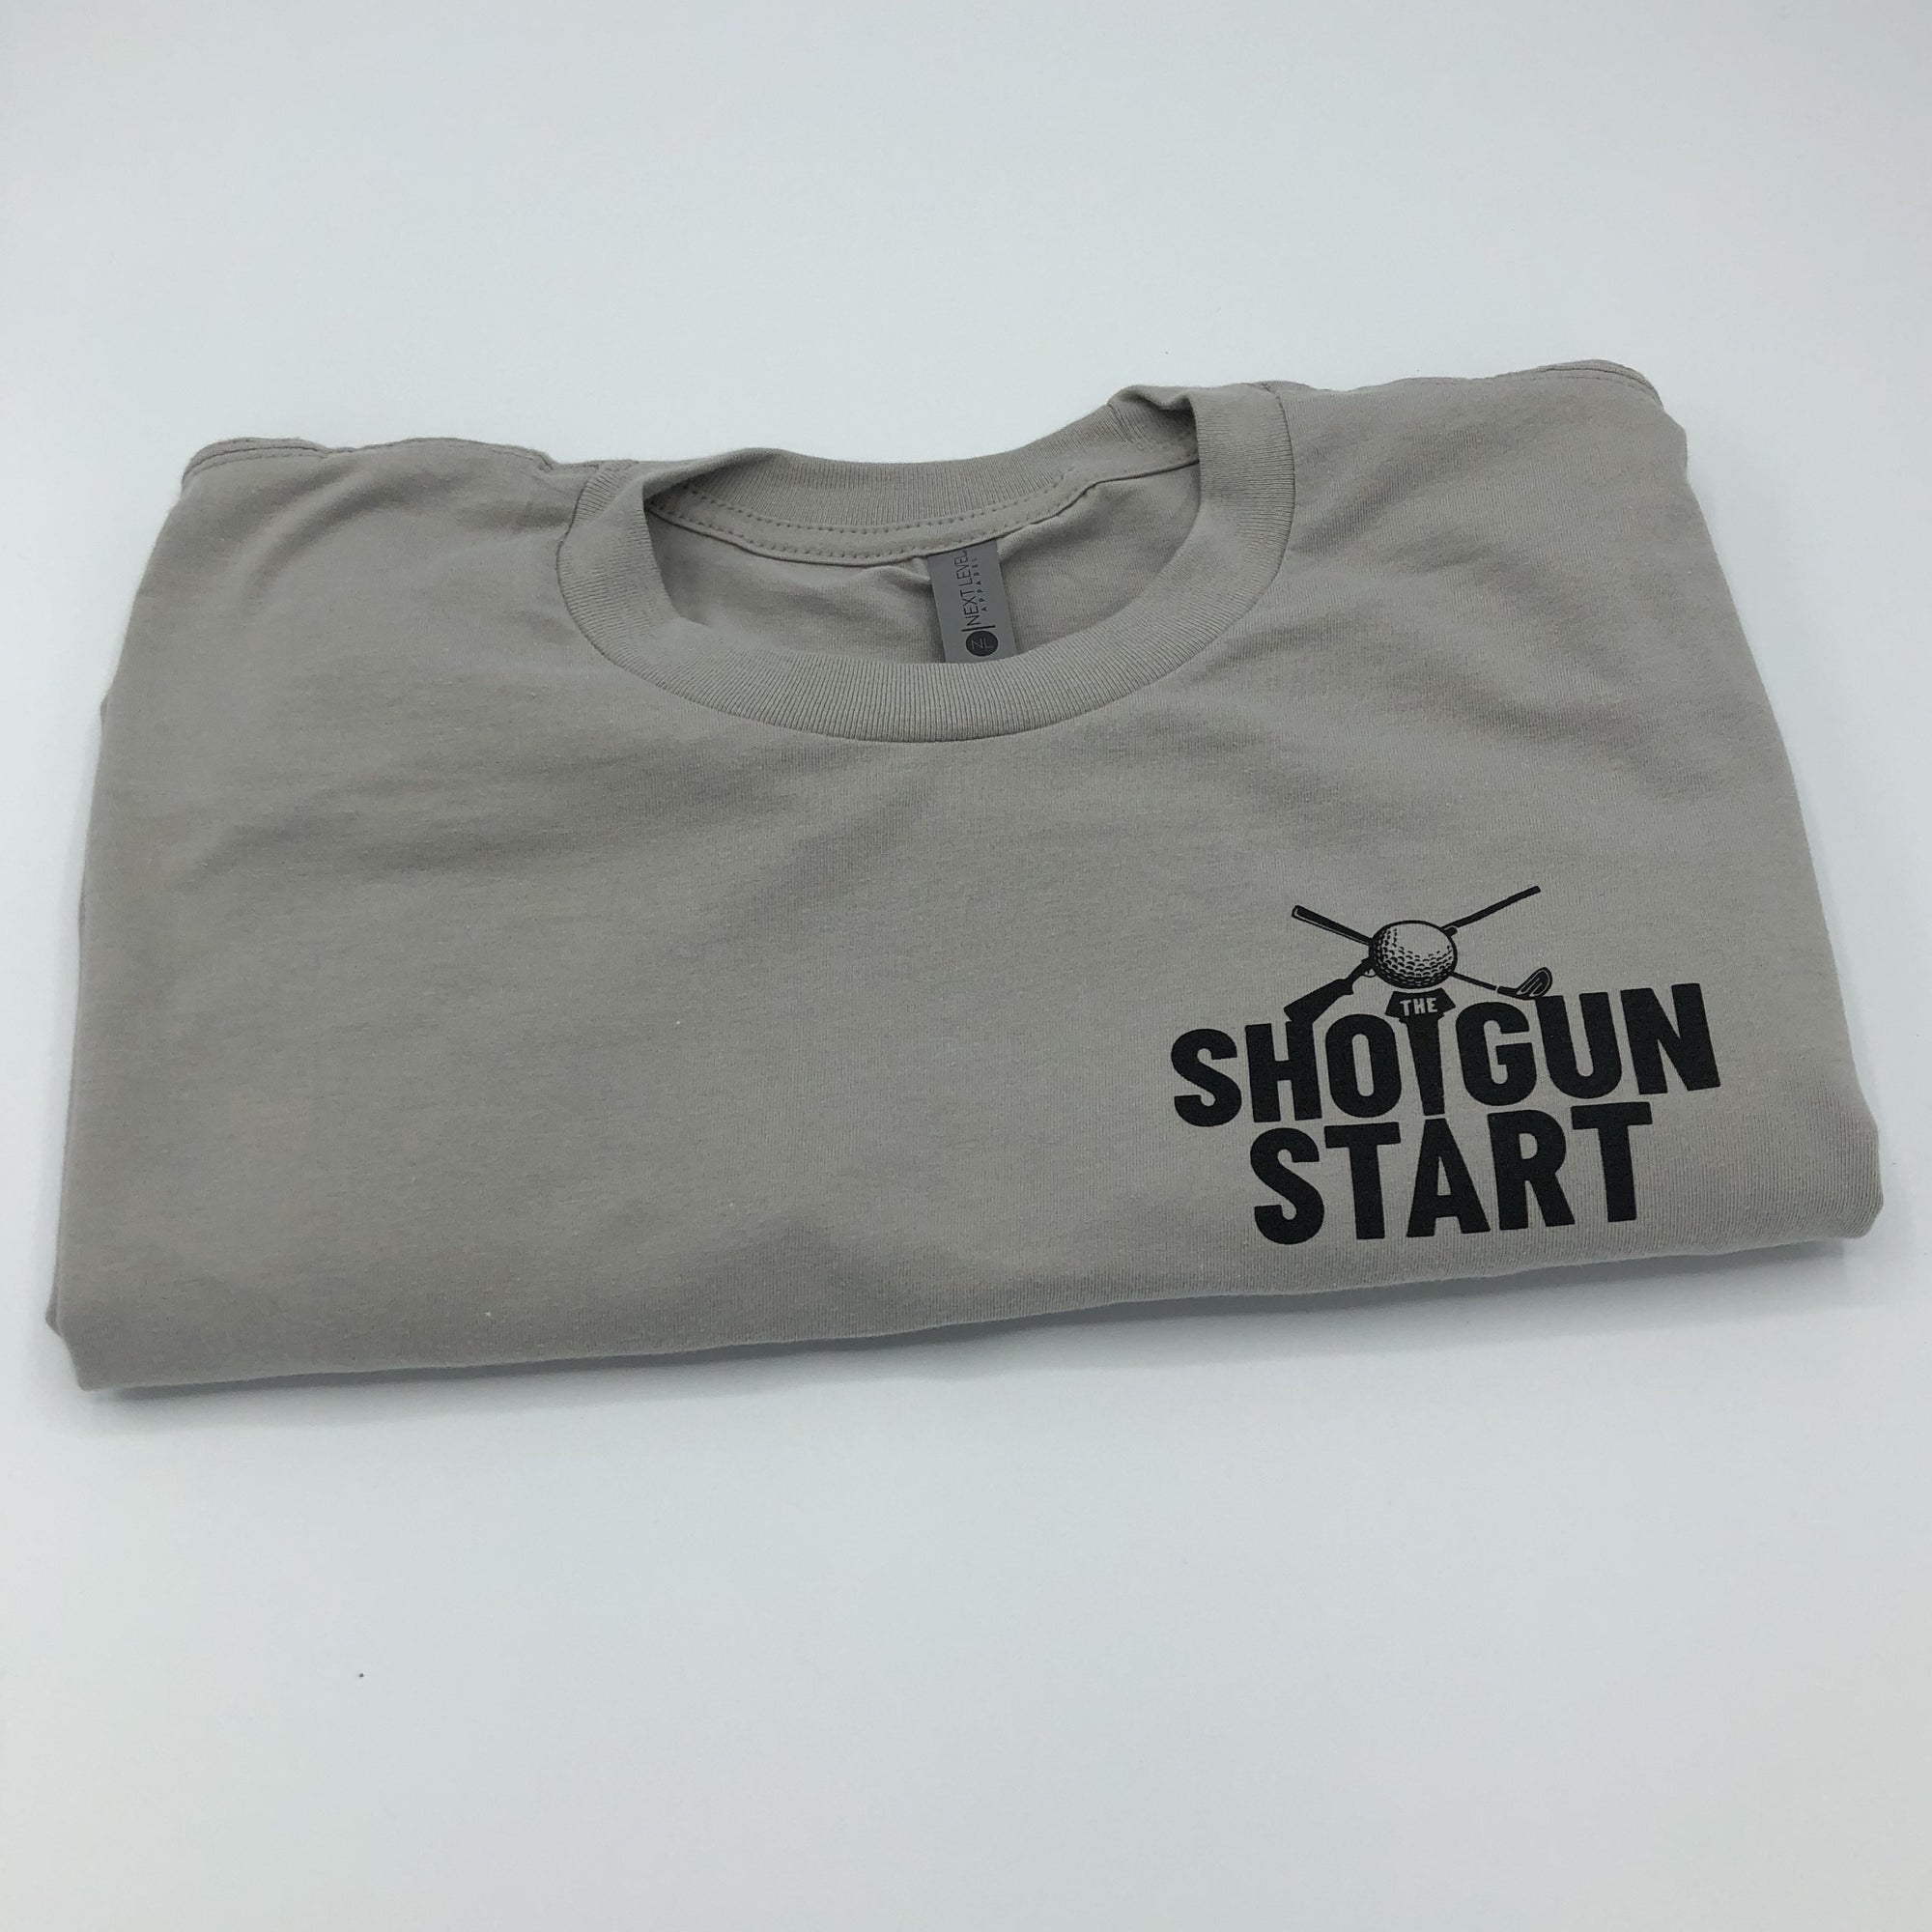 Shotgun Start "The Traveler" T-Shirt